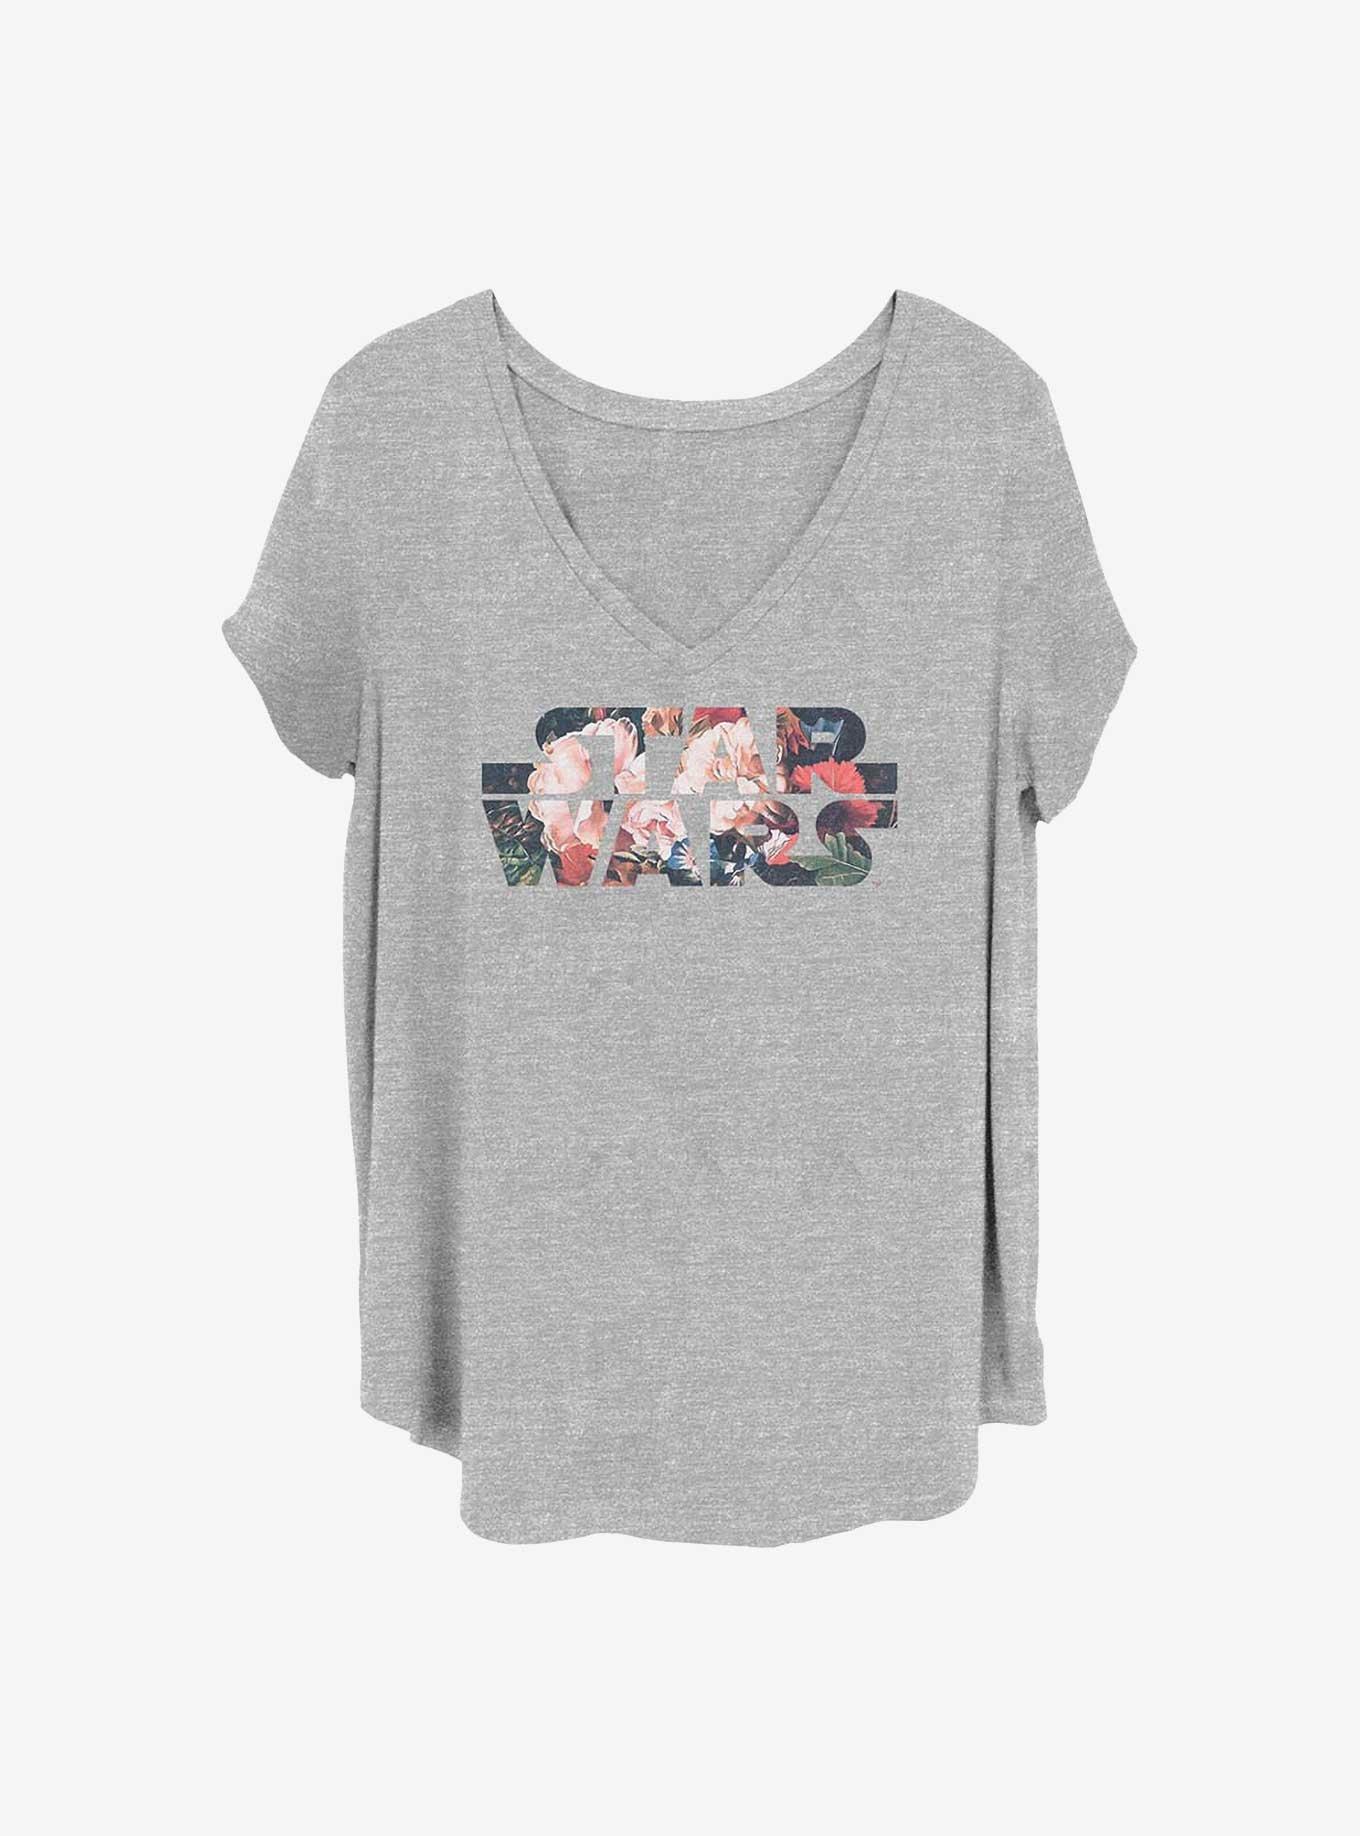 Star Wars Antique Flowers Girls T-Shirt Plus